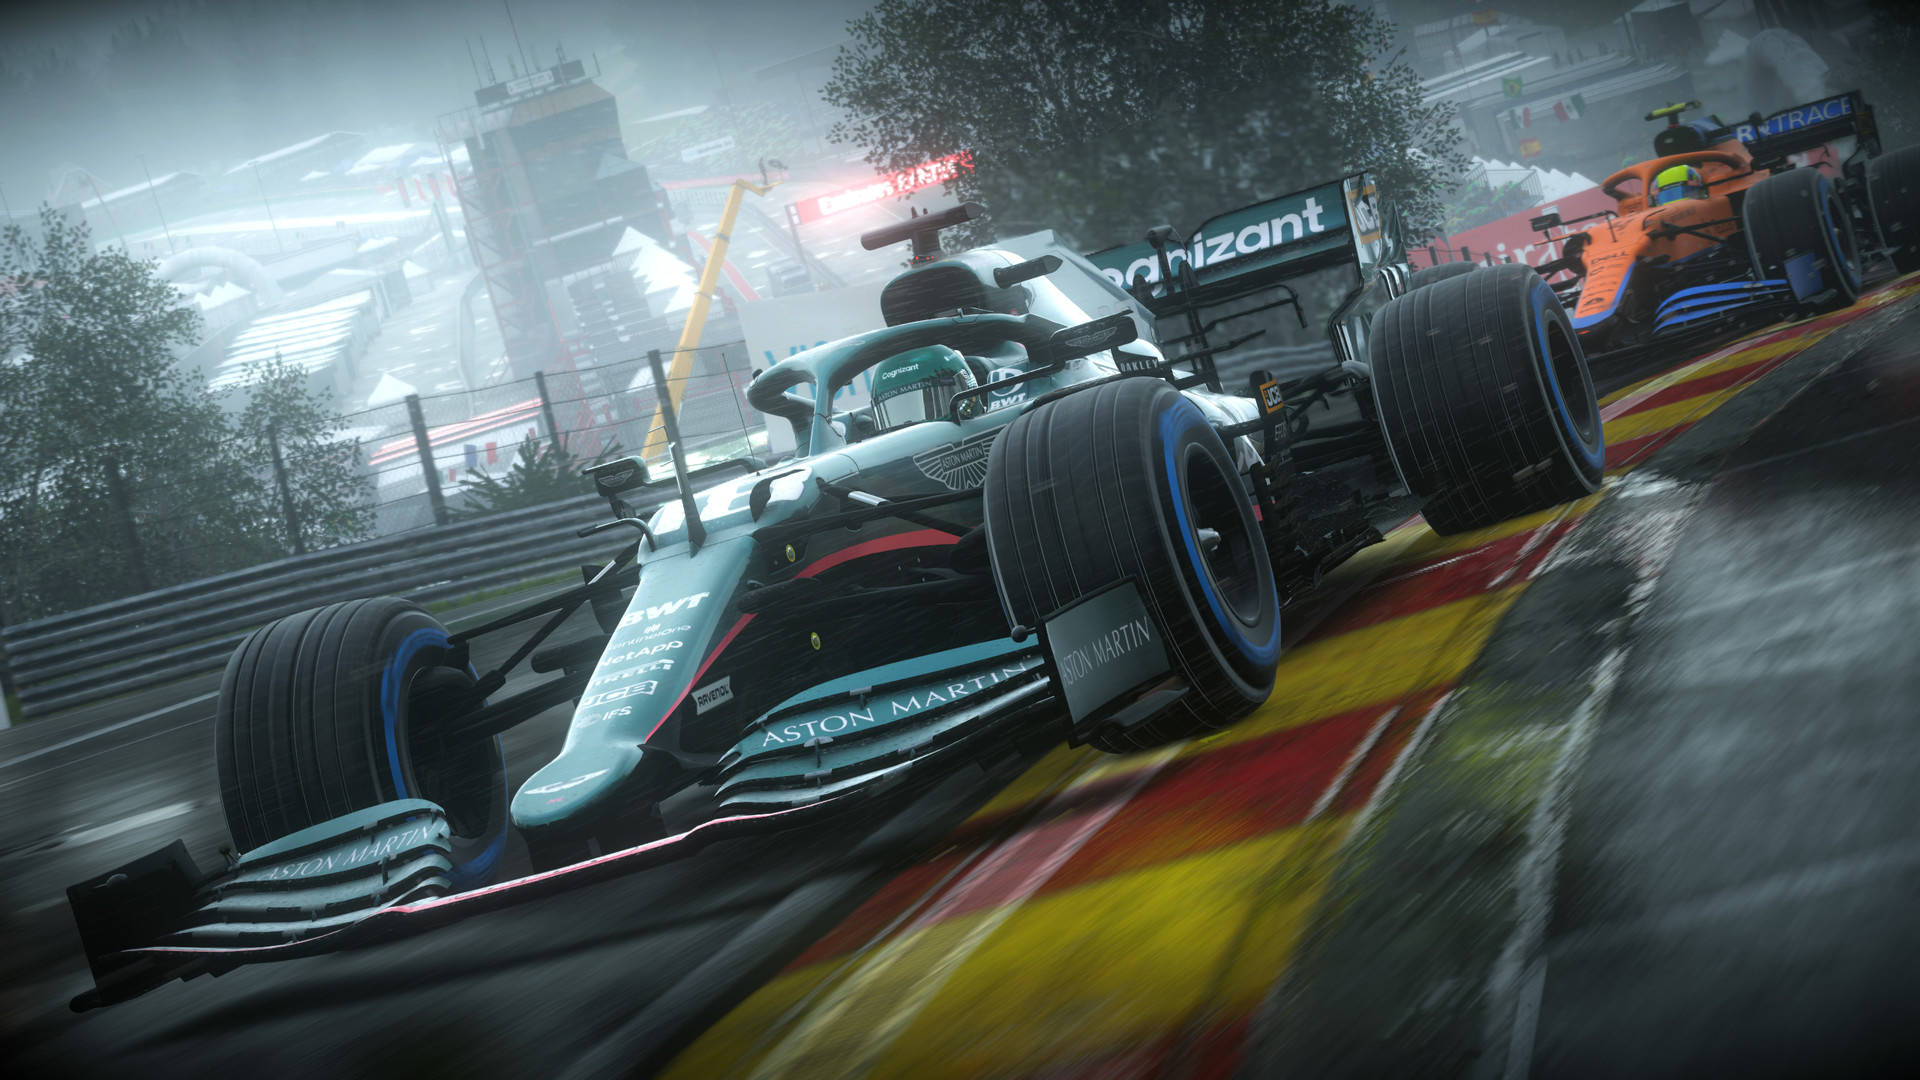 F1 2021 - Xbox Series X/Xbox One